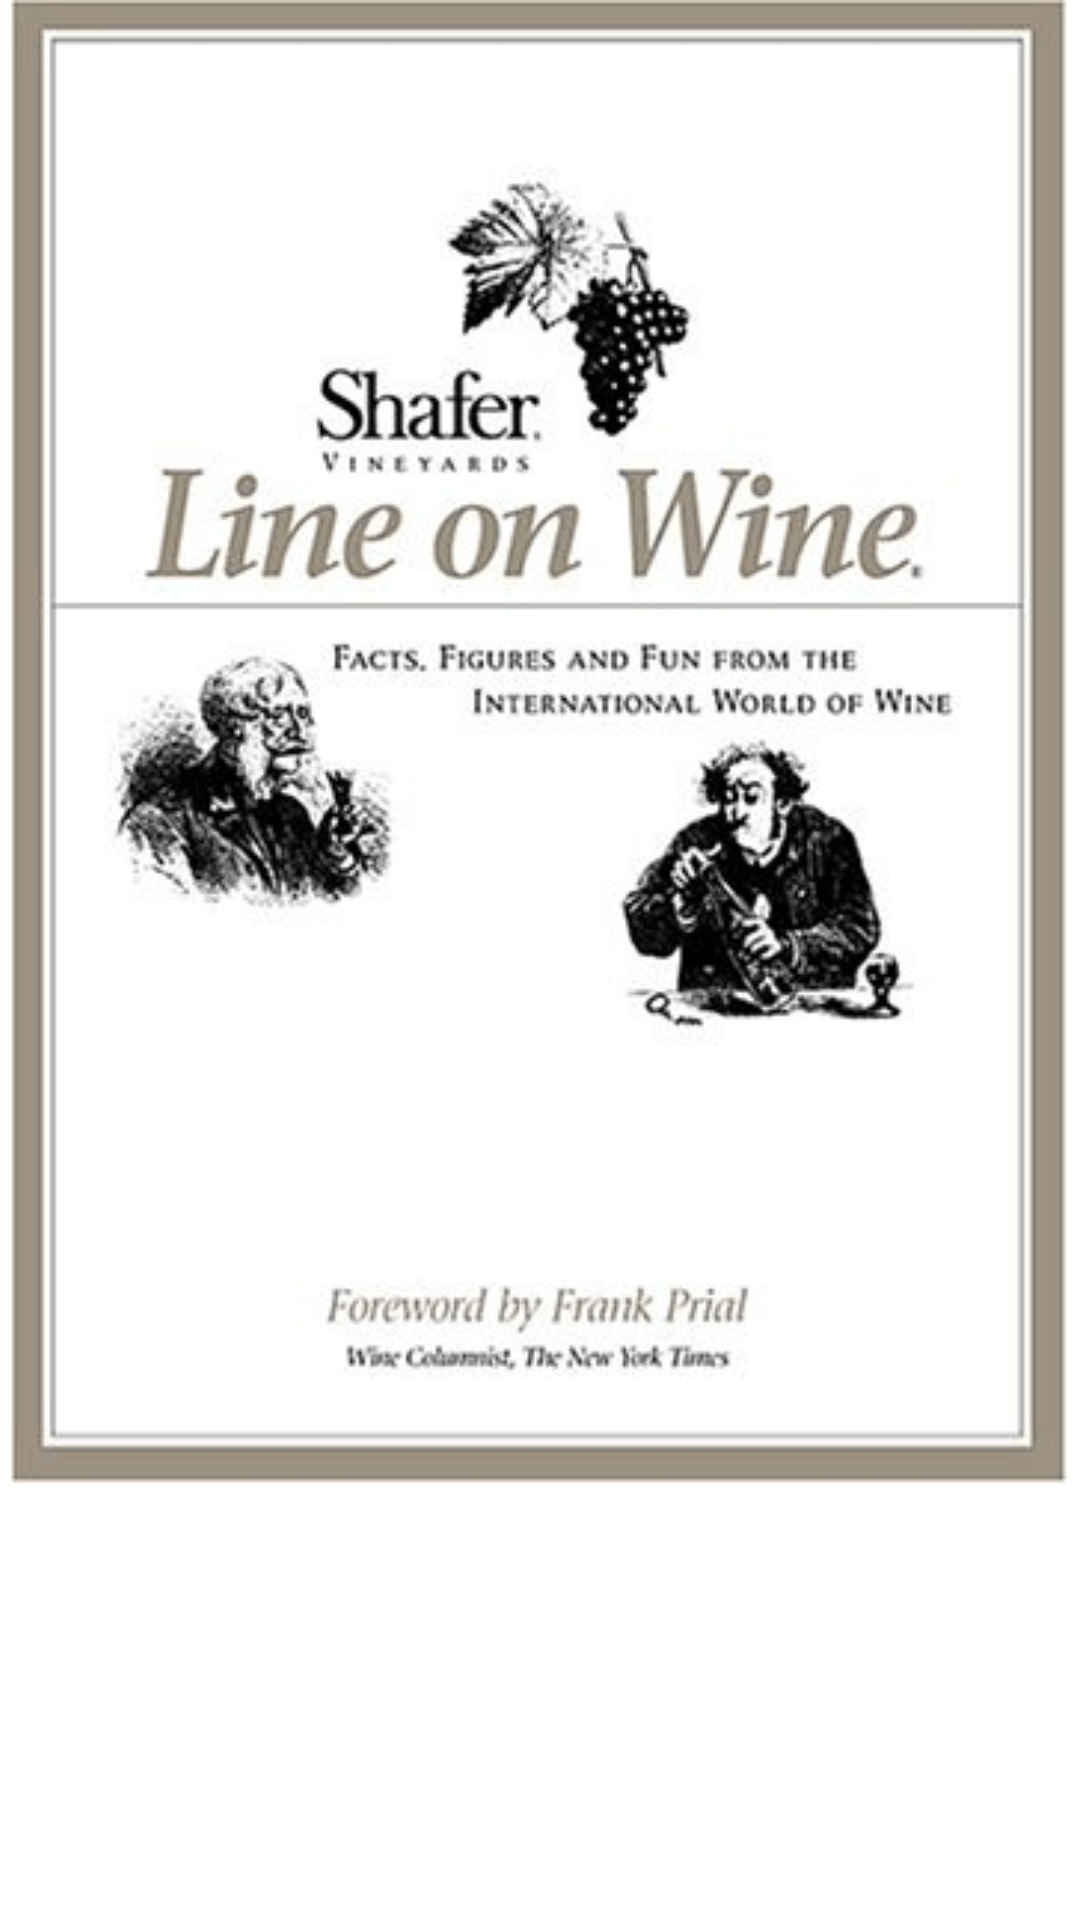 Shafer Vineyards' Line on Wine